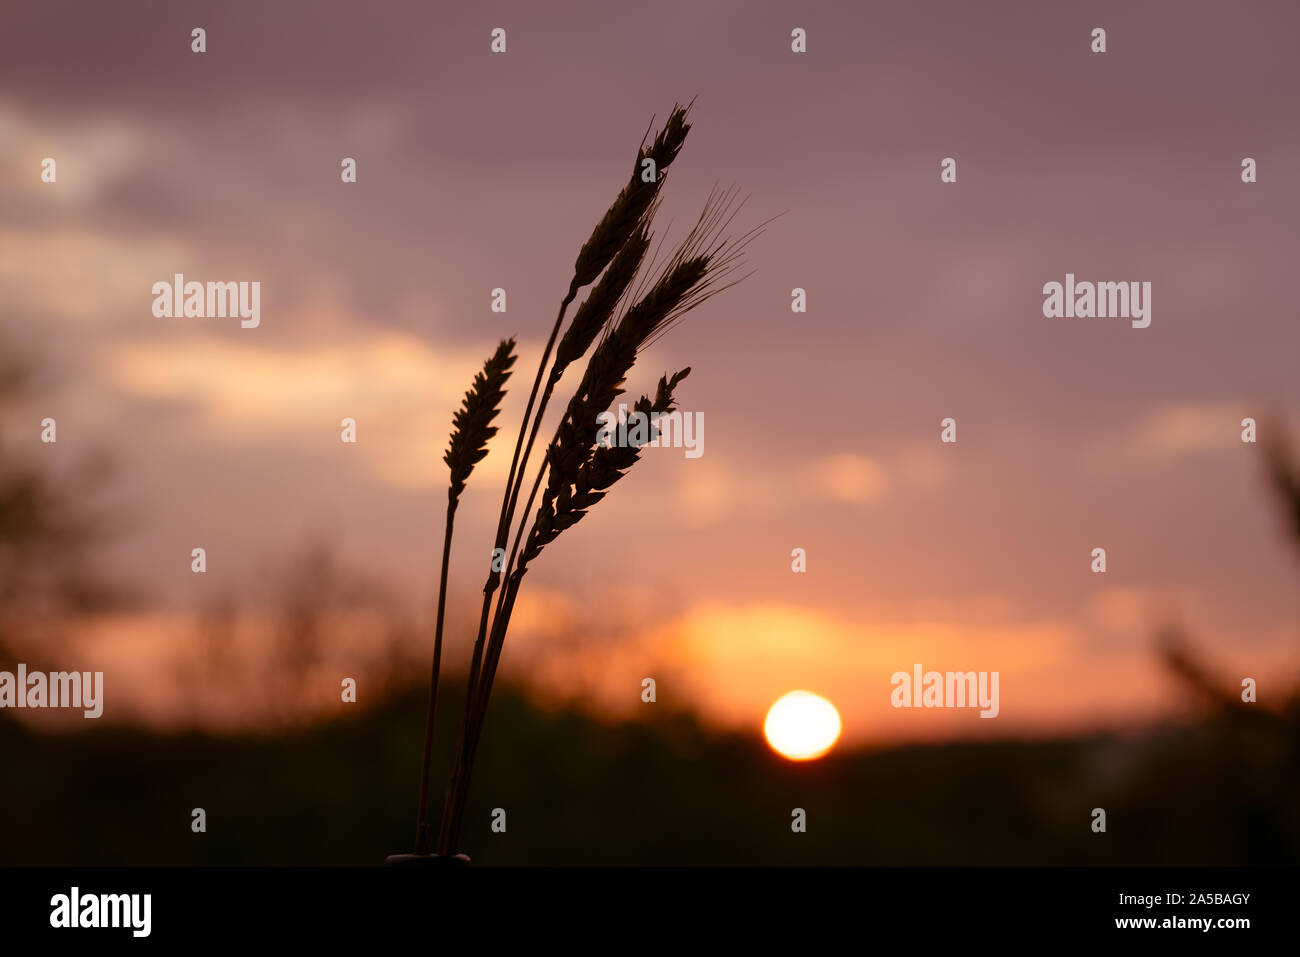 Grass spikes on sunset sky background Stock Photo